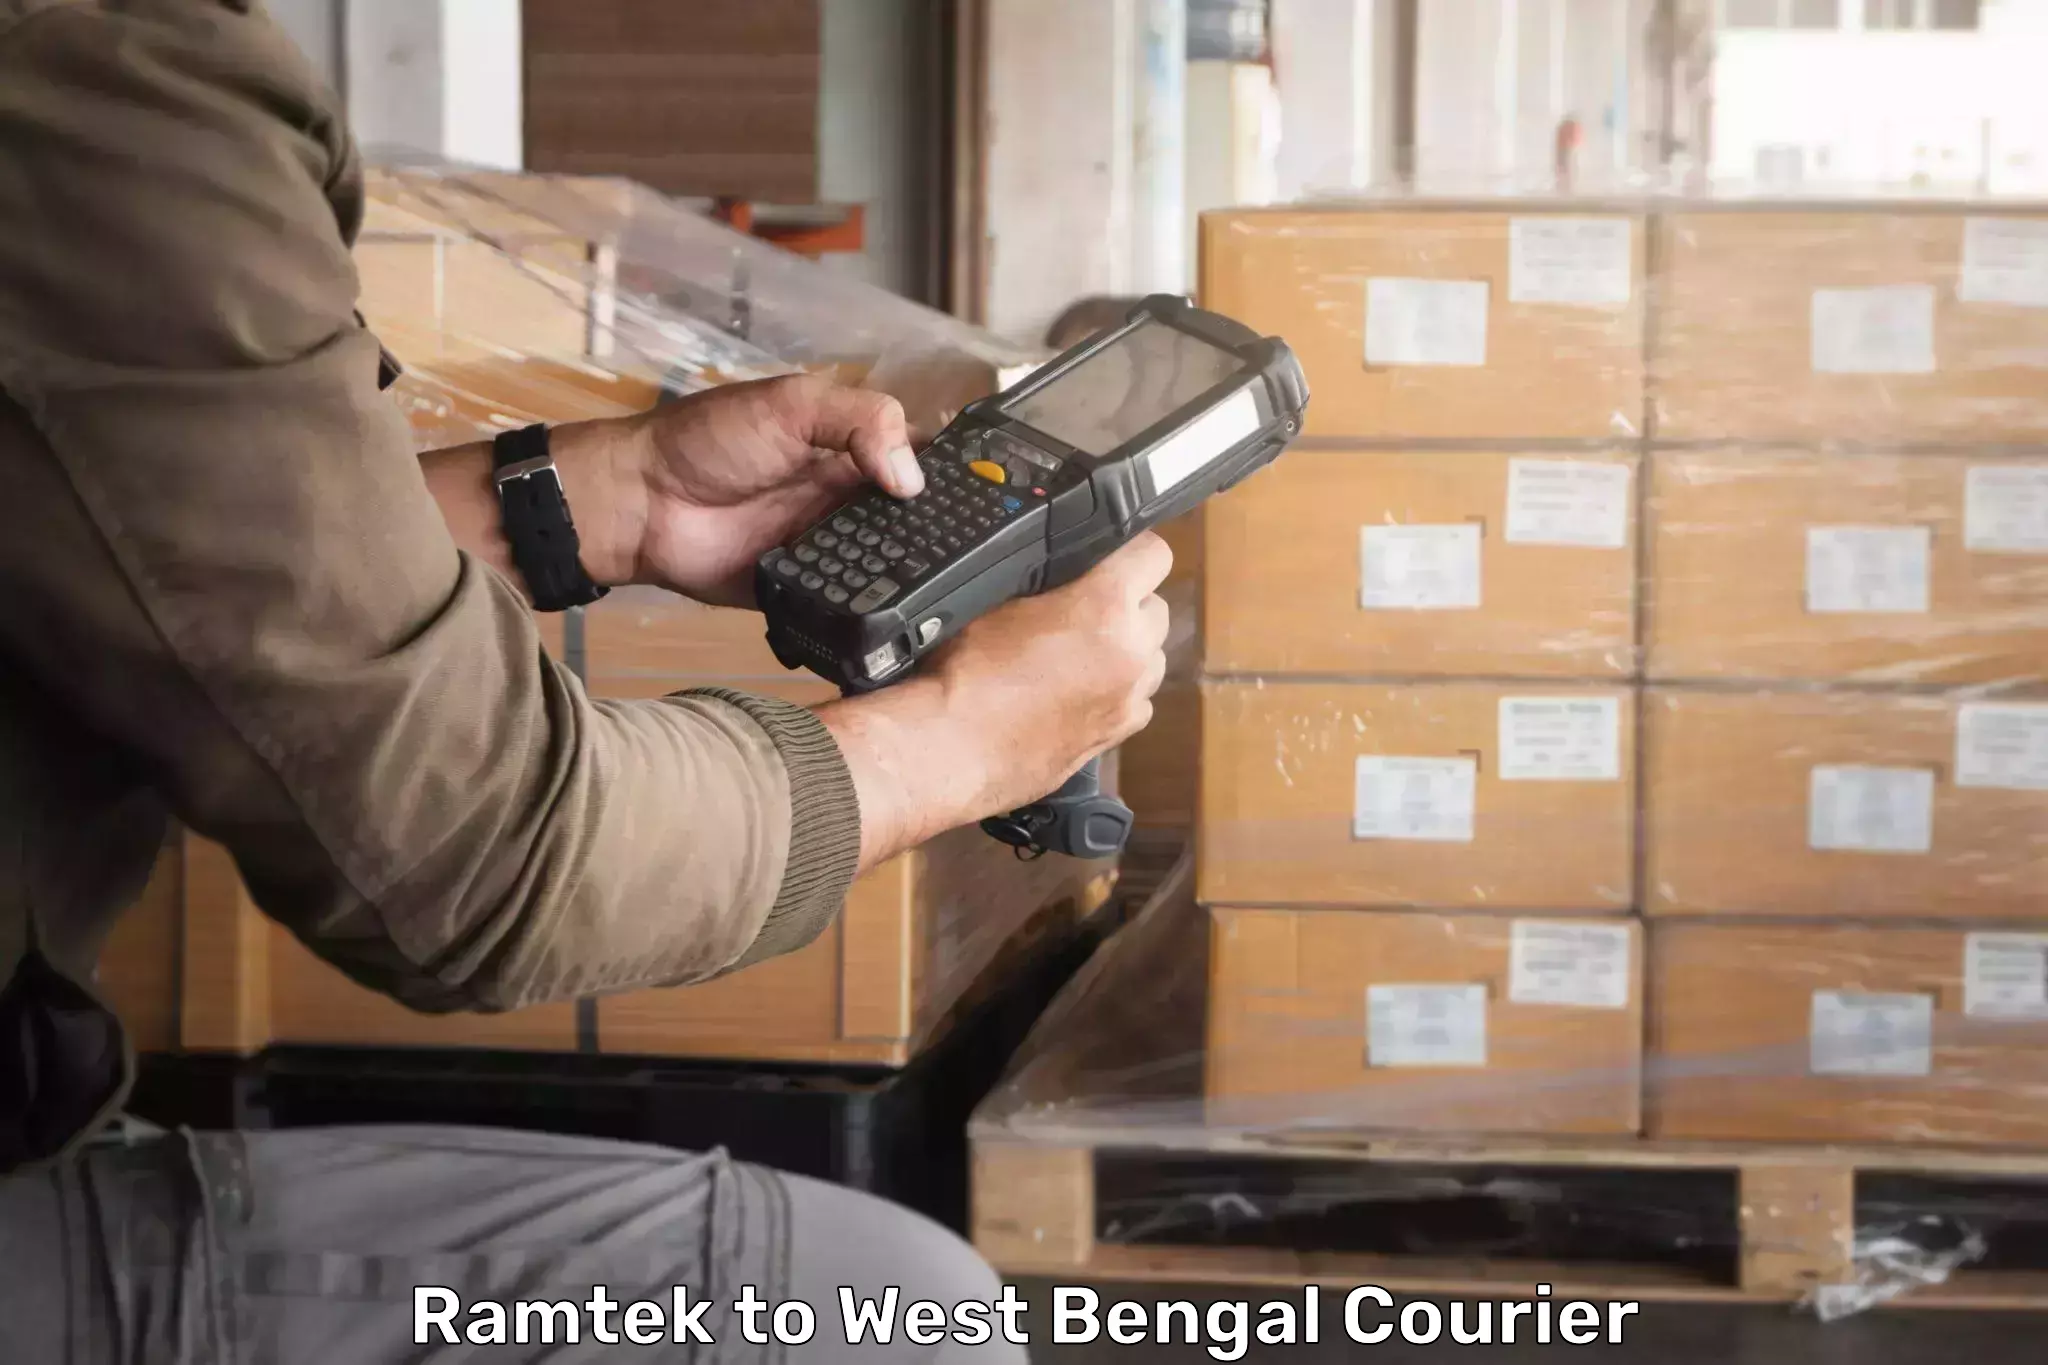 International courier networks Ramtek to Kolkata Port